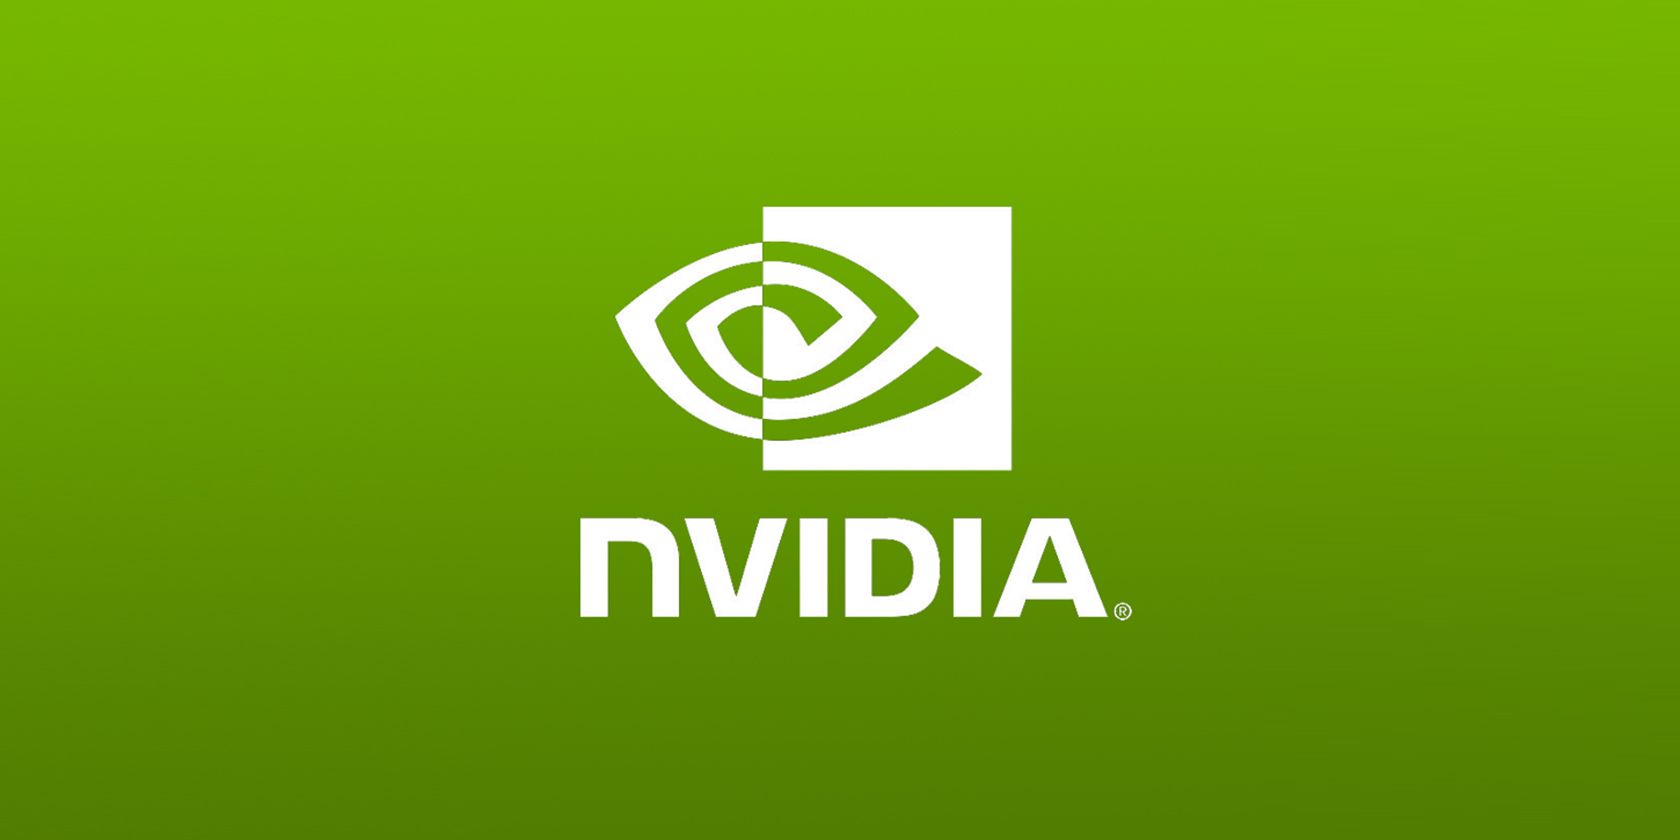 White NVIDIA logo on green